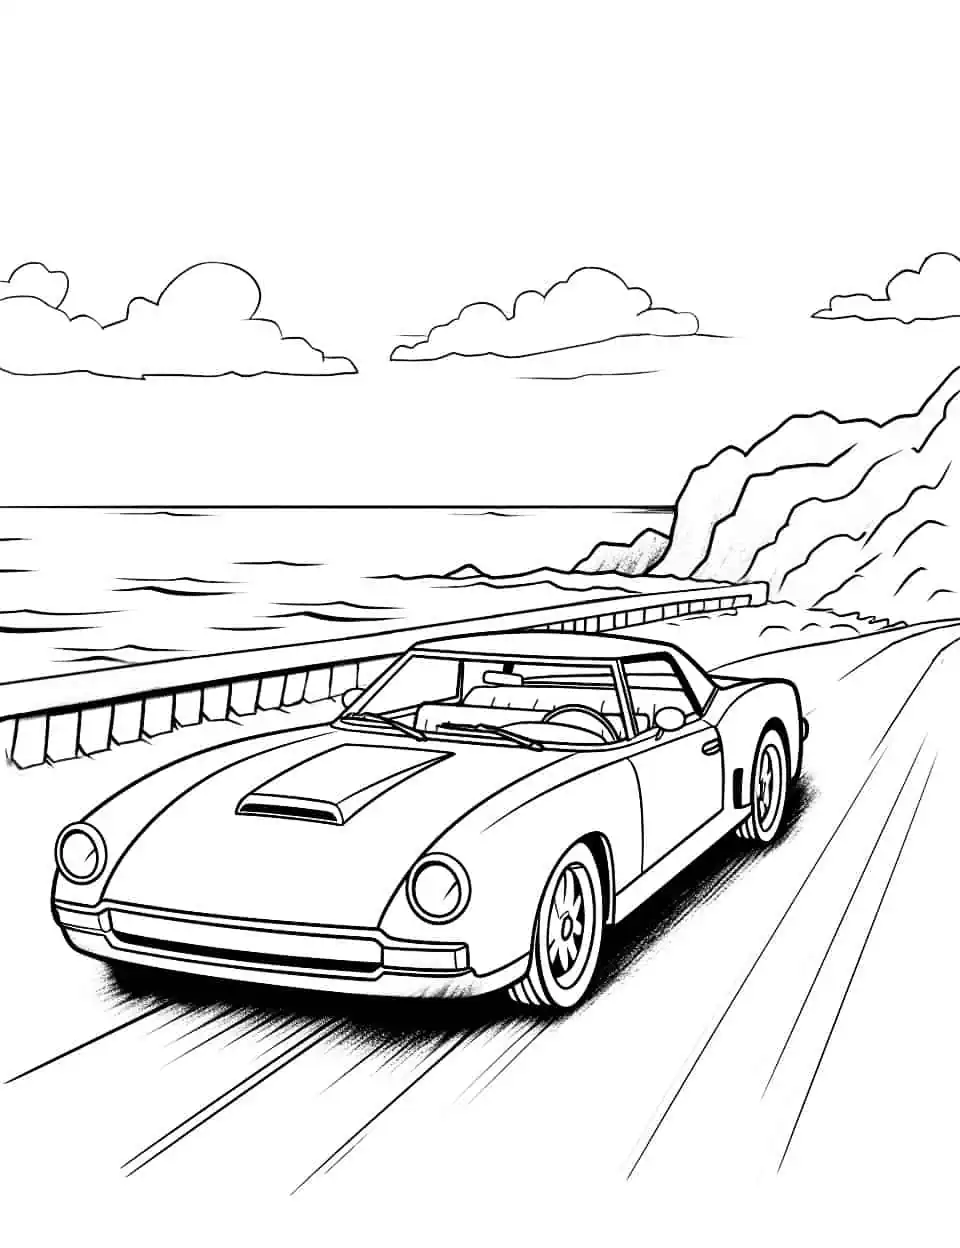 Cool Convertible Car Coloring Page - A sleek convertible driving down a coastal road.